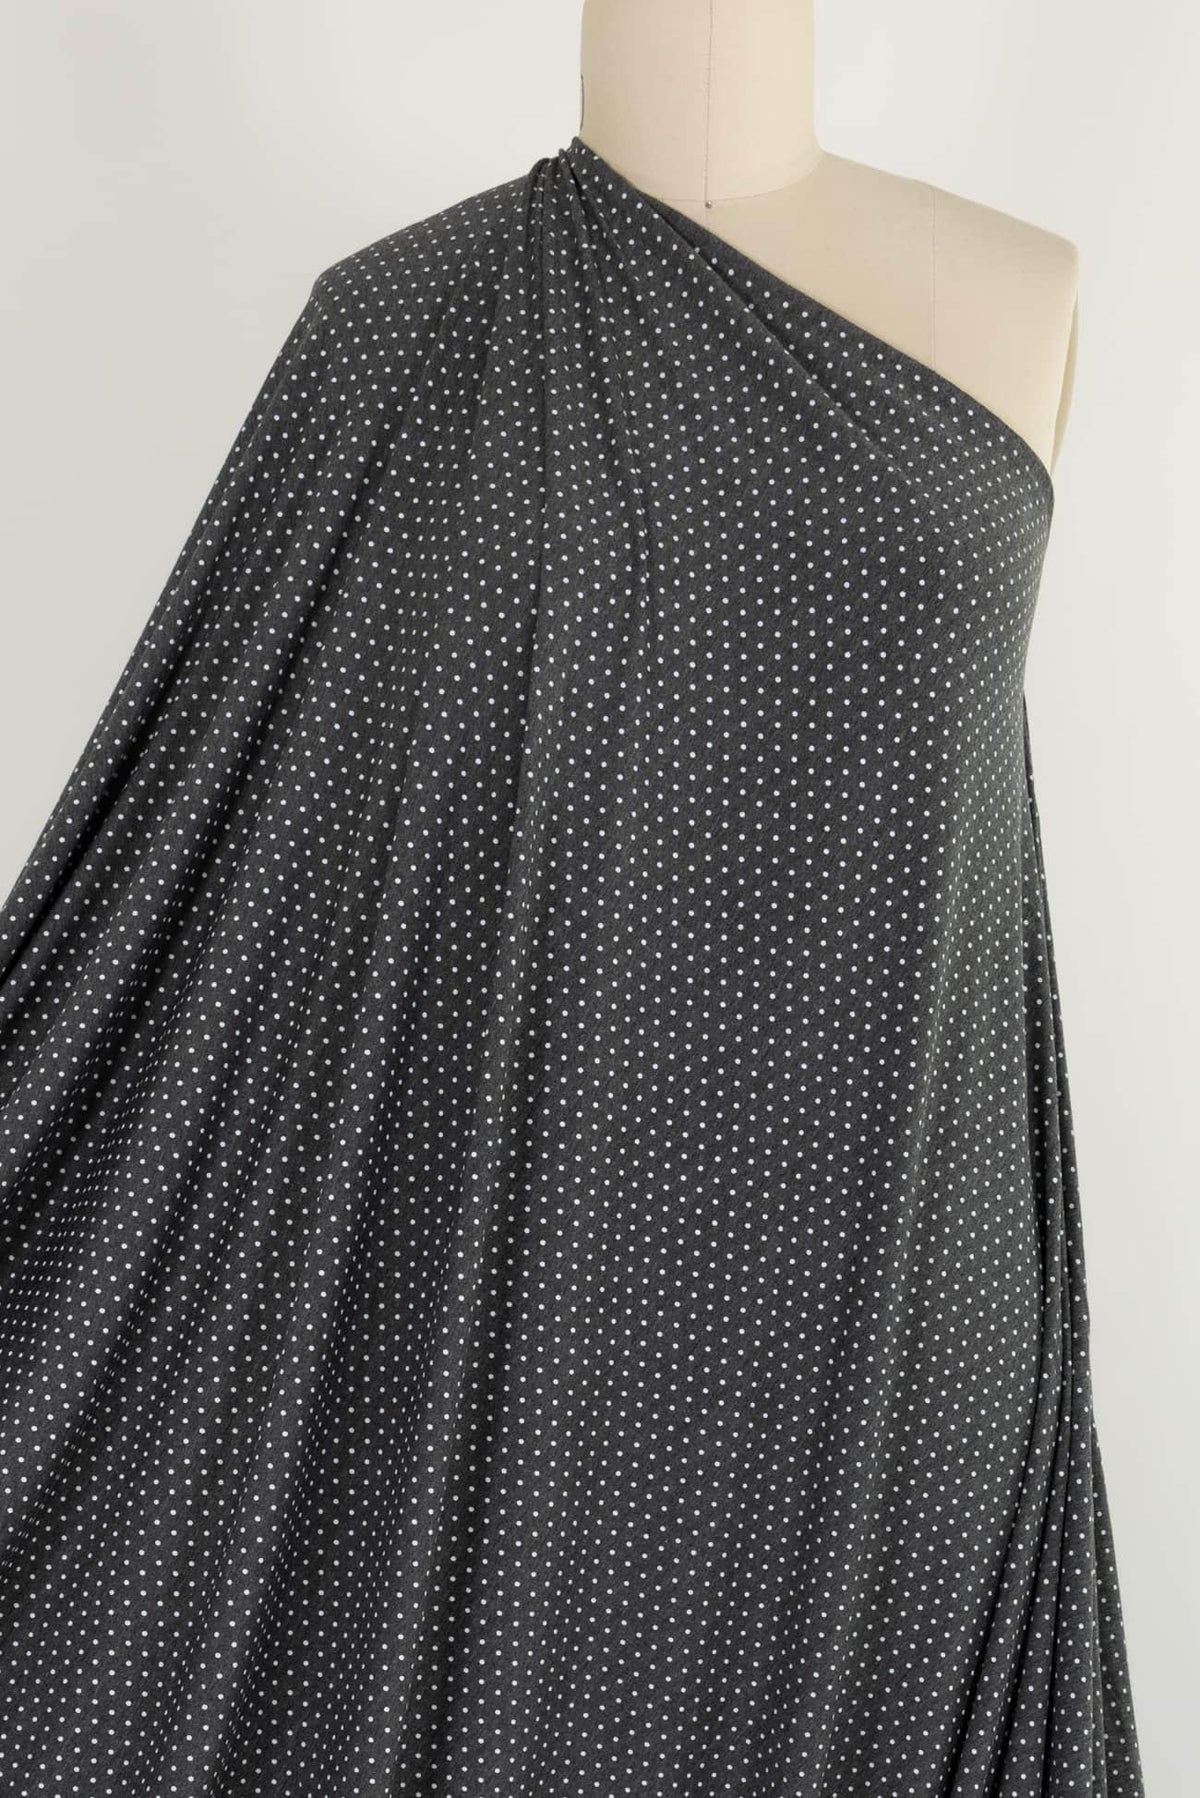 Monique Dots Bamboo Knit - Marcy Tilton Fabrics